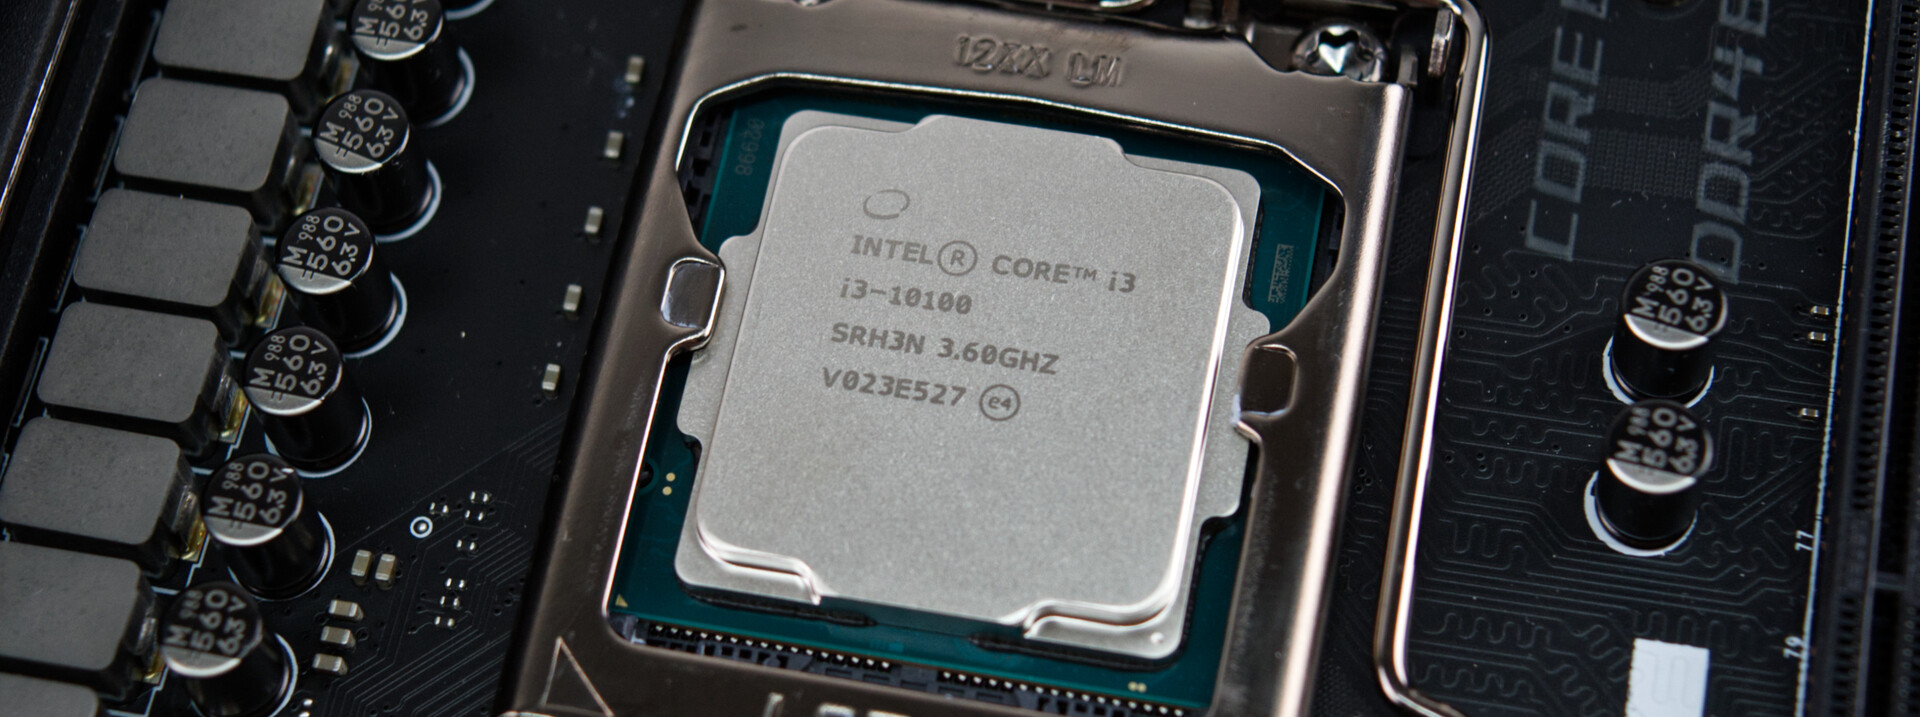 Intel Core i3-10100 CPU 3.6GHz (4.3GHz Turbo) LGA1200 10th Gen 4